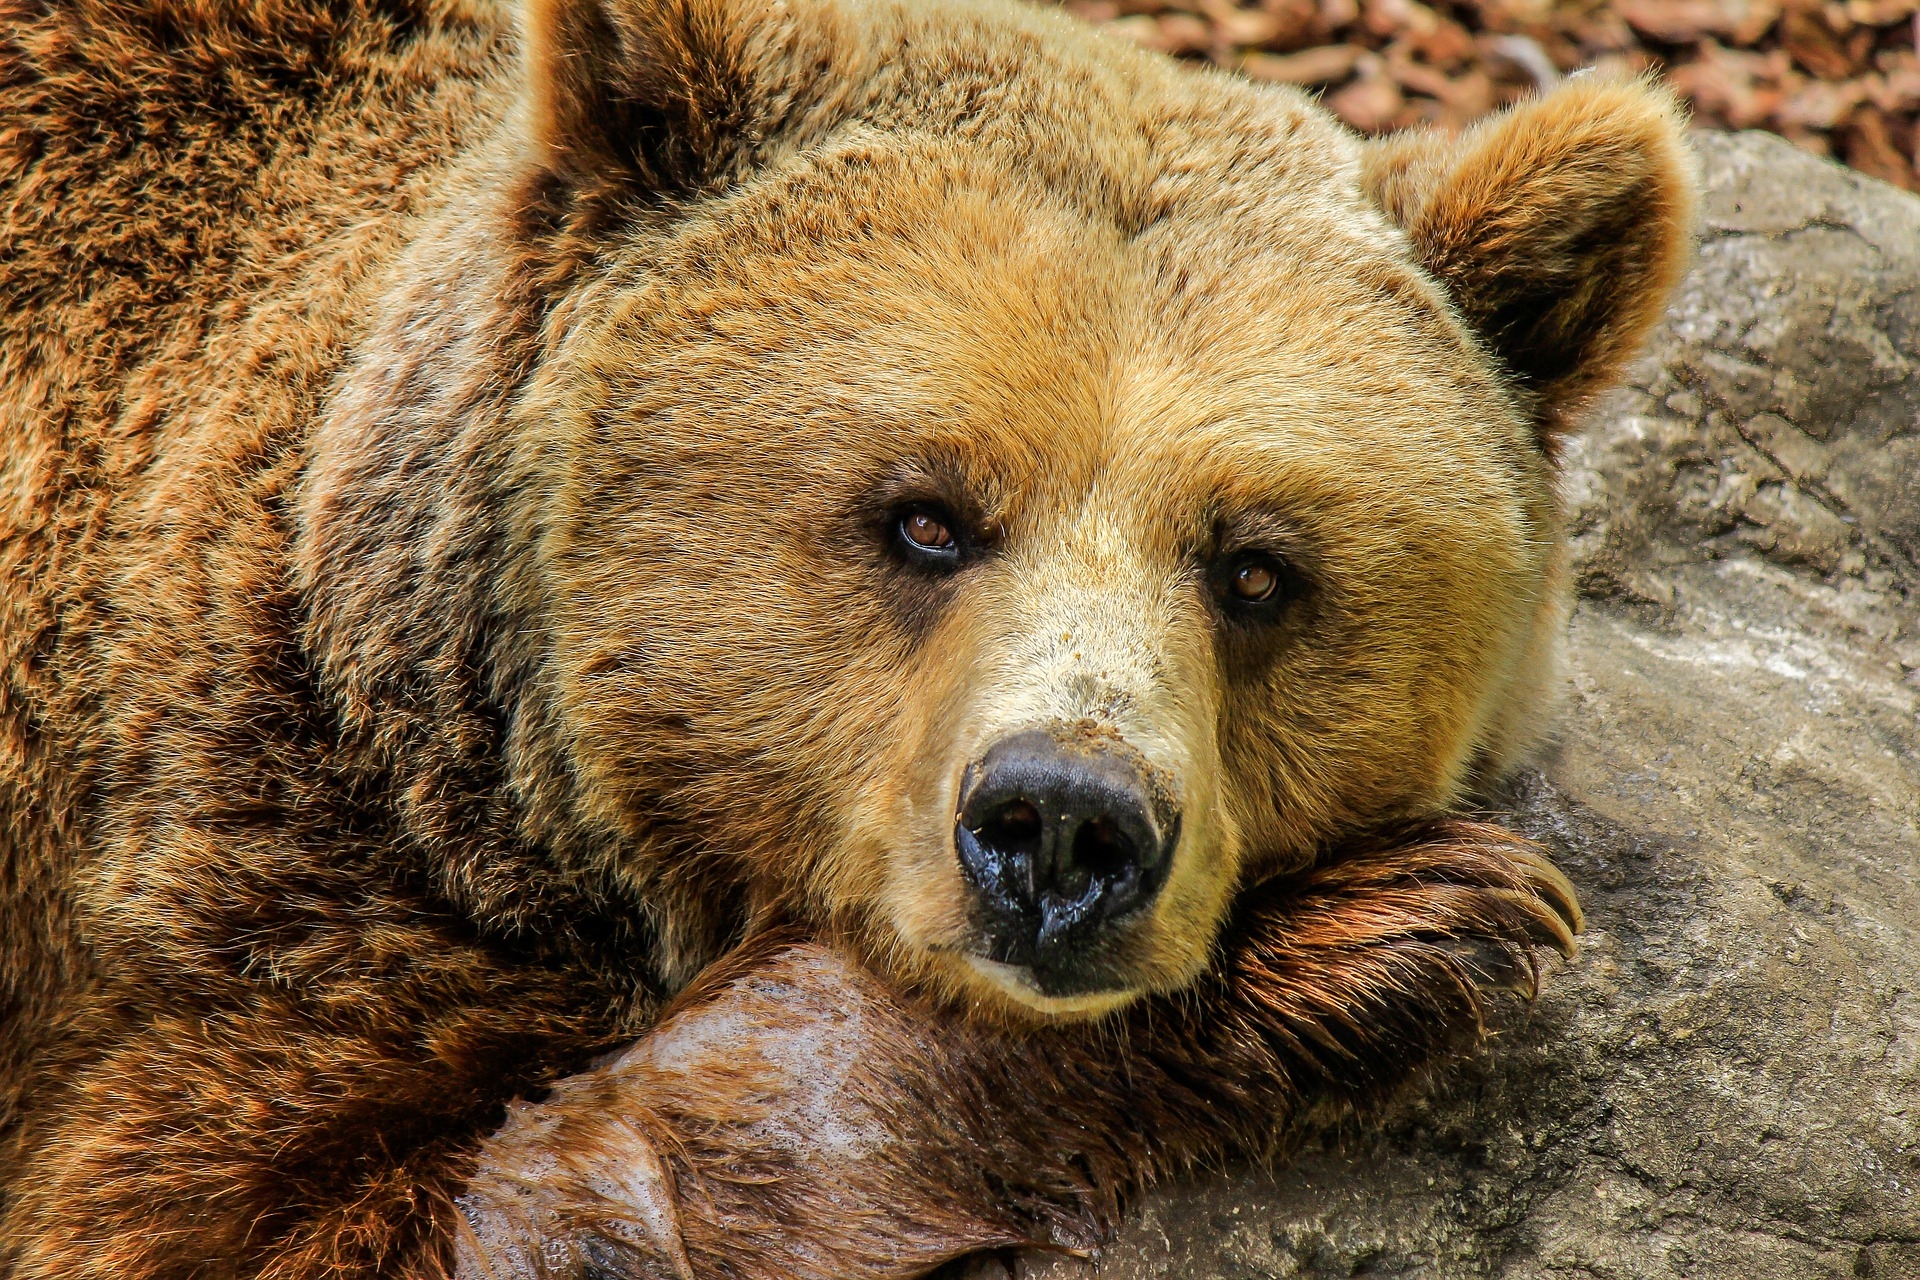 Инспектор комитета по охране животных Ленобласти ранил на охоте человека, целясь в медведя